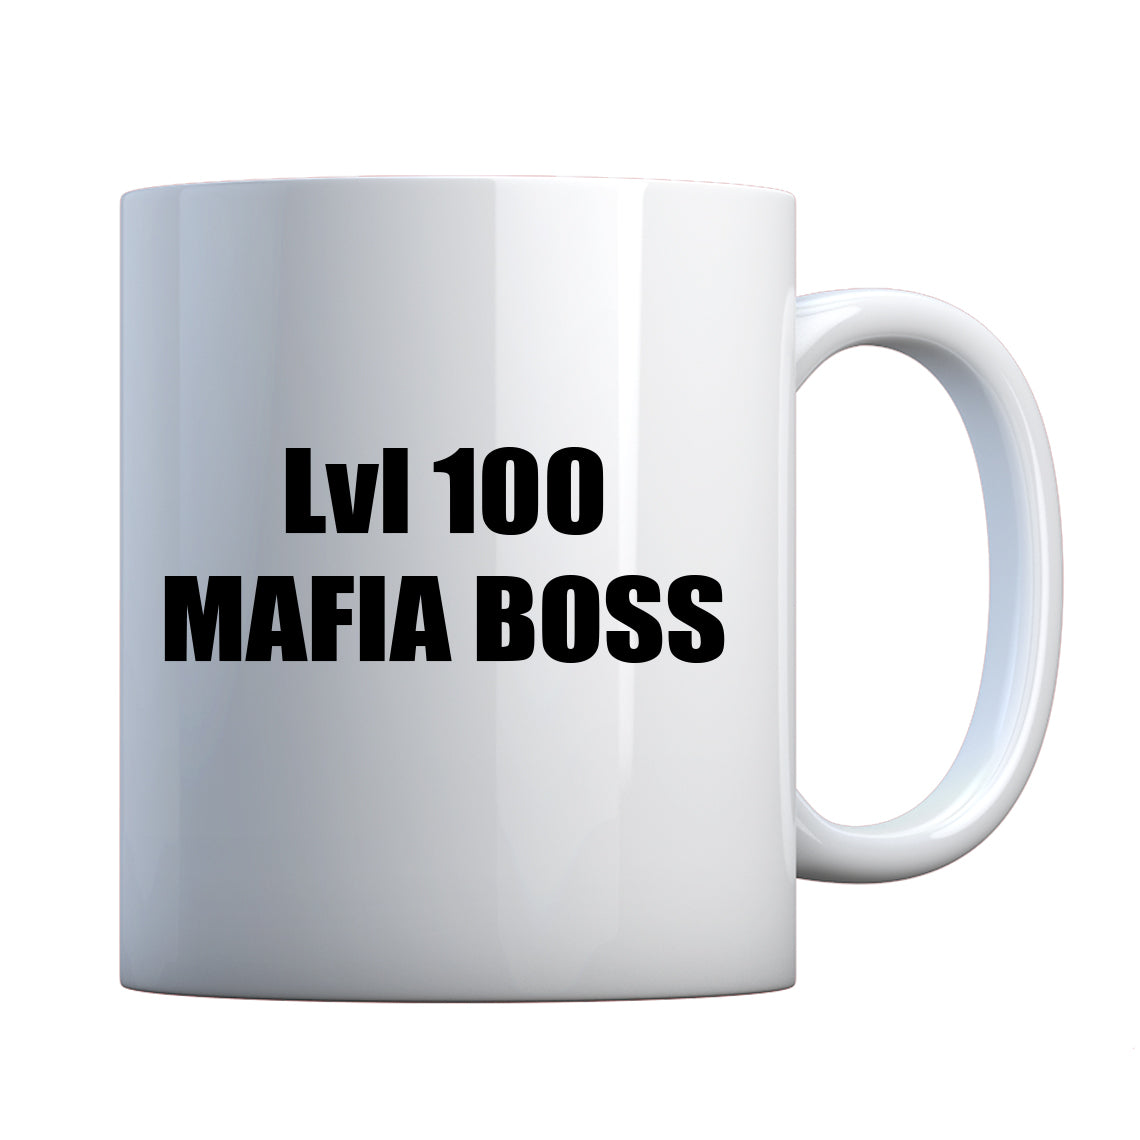 Lvl 100 Mafia Boss Ceramic Gift Mug